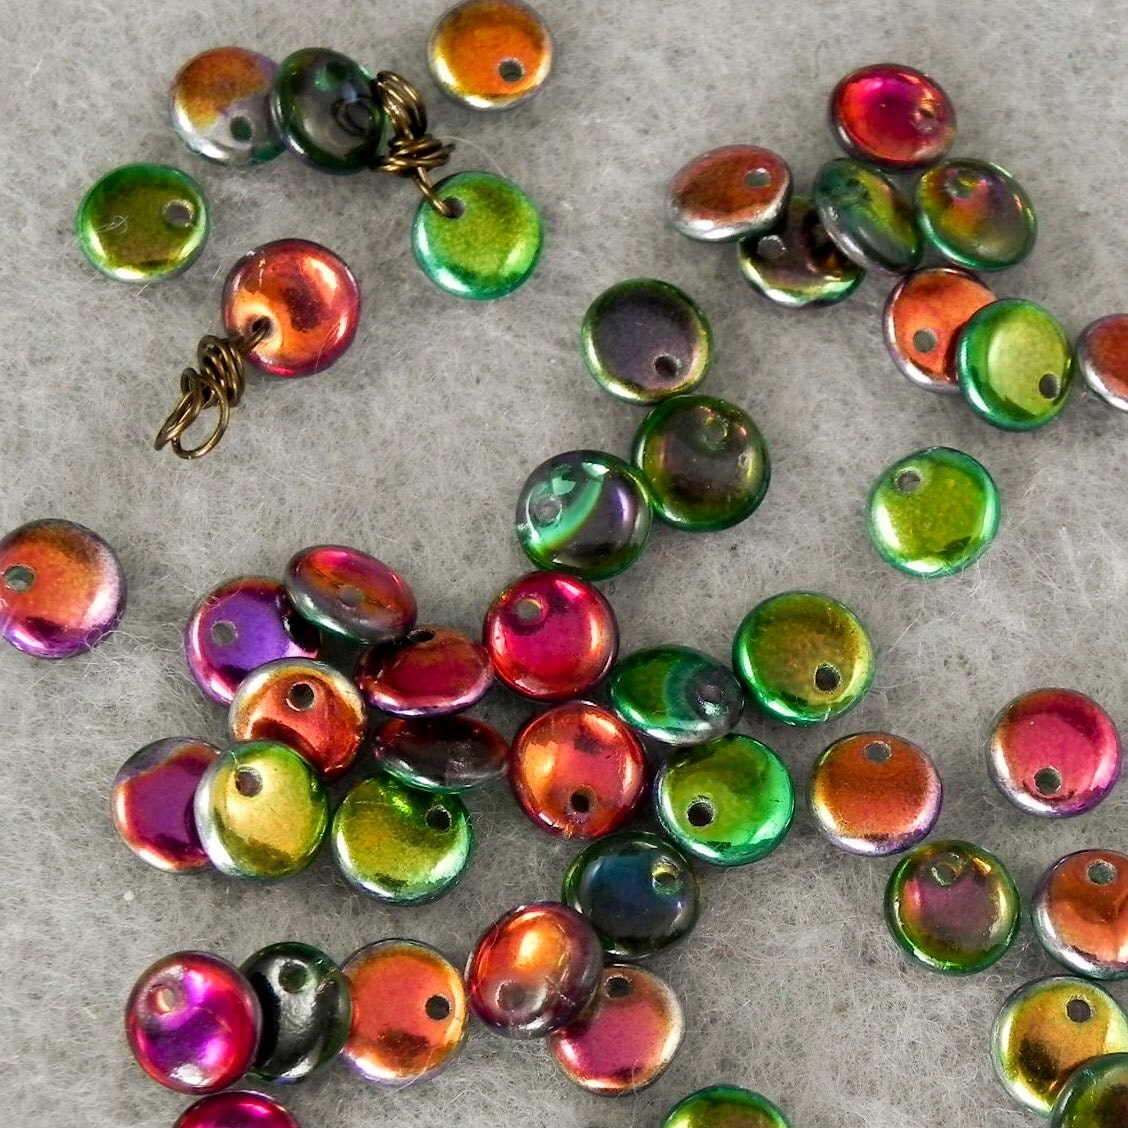 Marea 6mm Lentil Bead One Hole Czech Glass Beads 50 beads